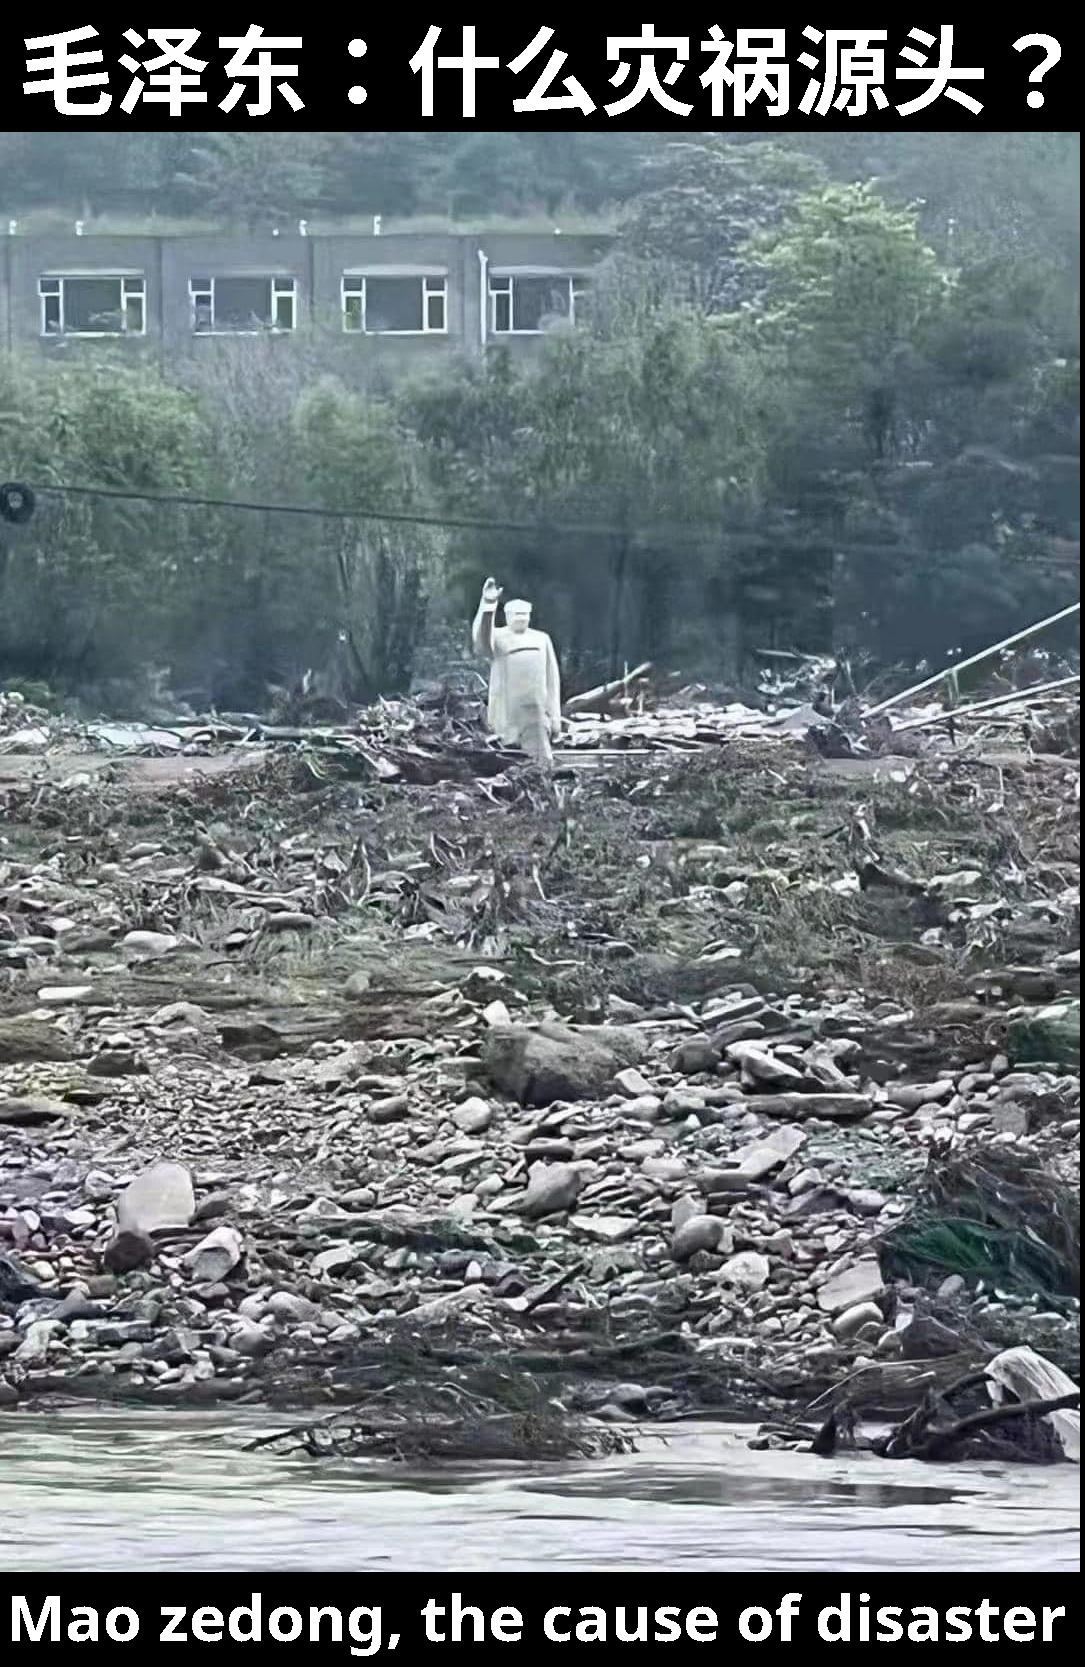 Mao Zedong statue over rubble